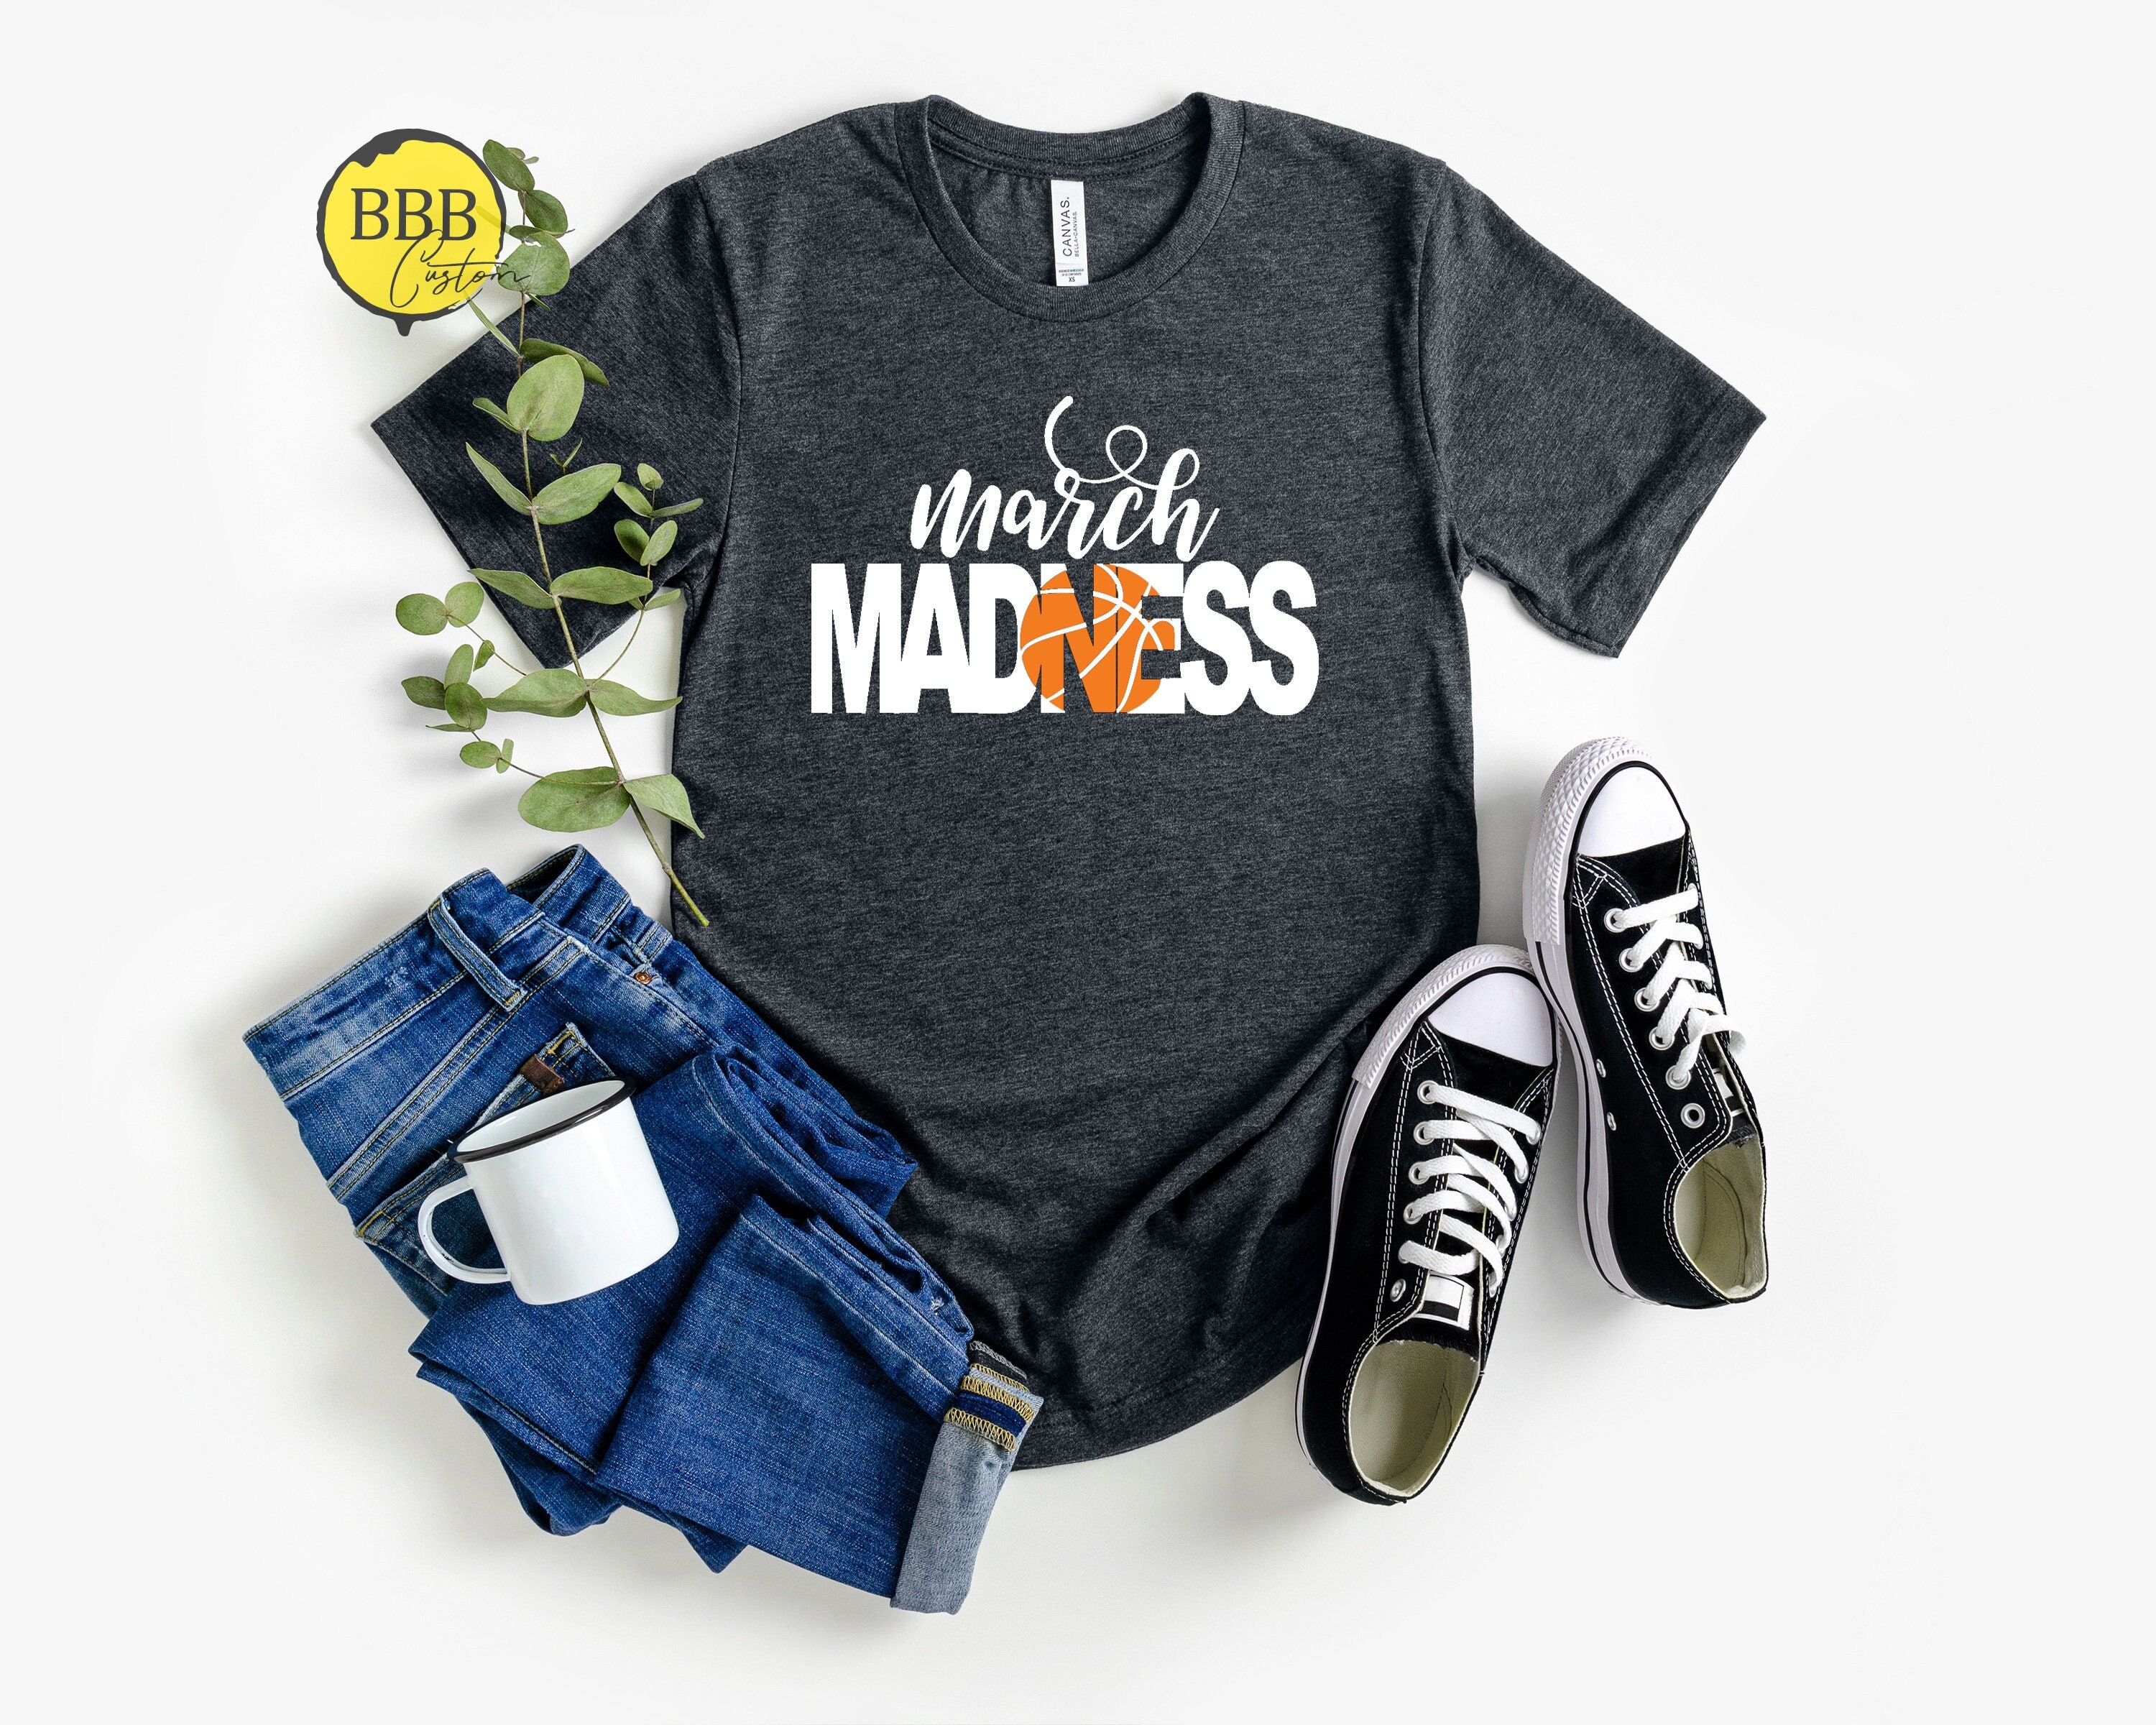 The Best March Madness FAMILY Shirts, Sweatshirts, Shorts & Jerseys